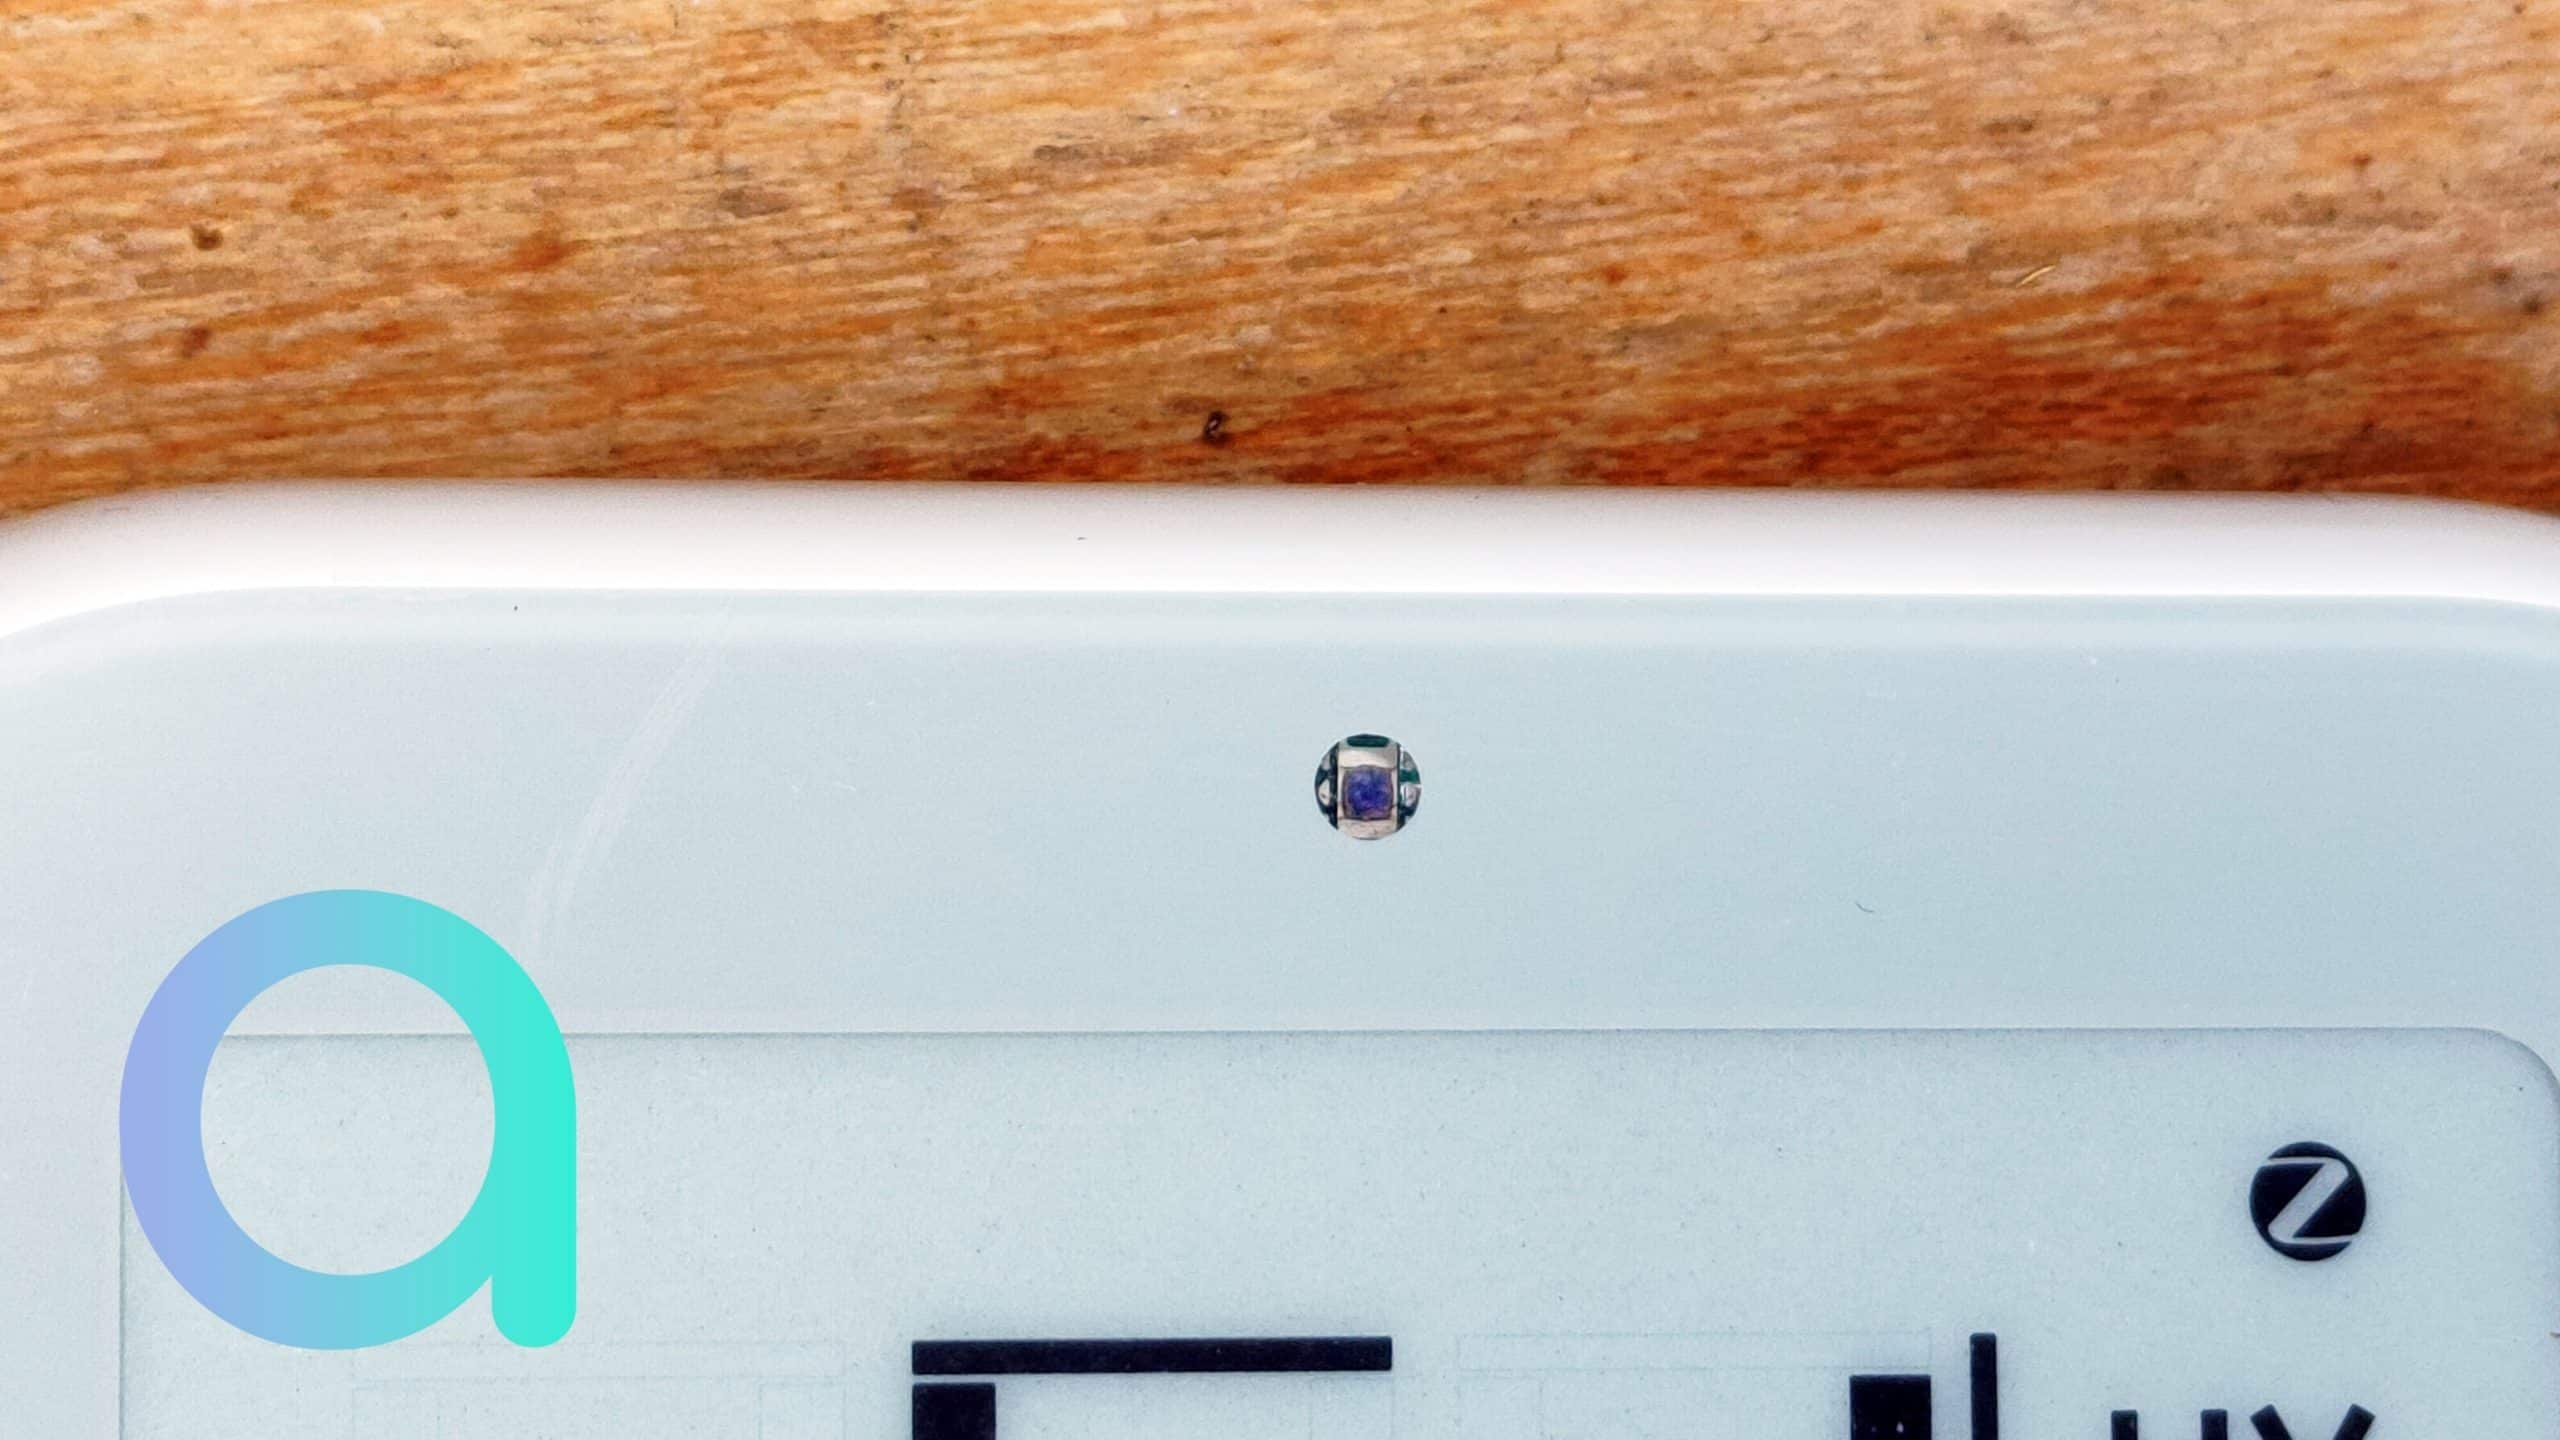 2 pièces Zigbee-Thermomètre intelligent MOES ZigBee, Bluetooth, maille,  luminosité, température, humidité, ca - Cdiscount Maison